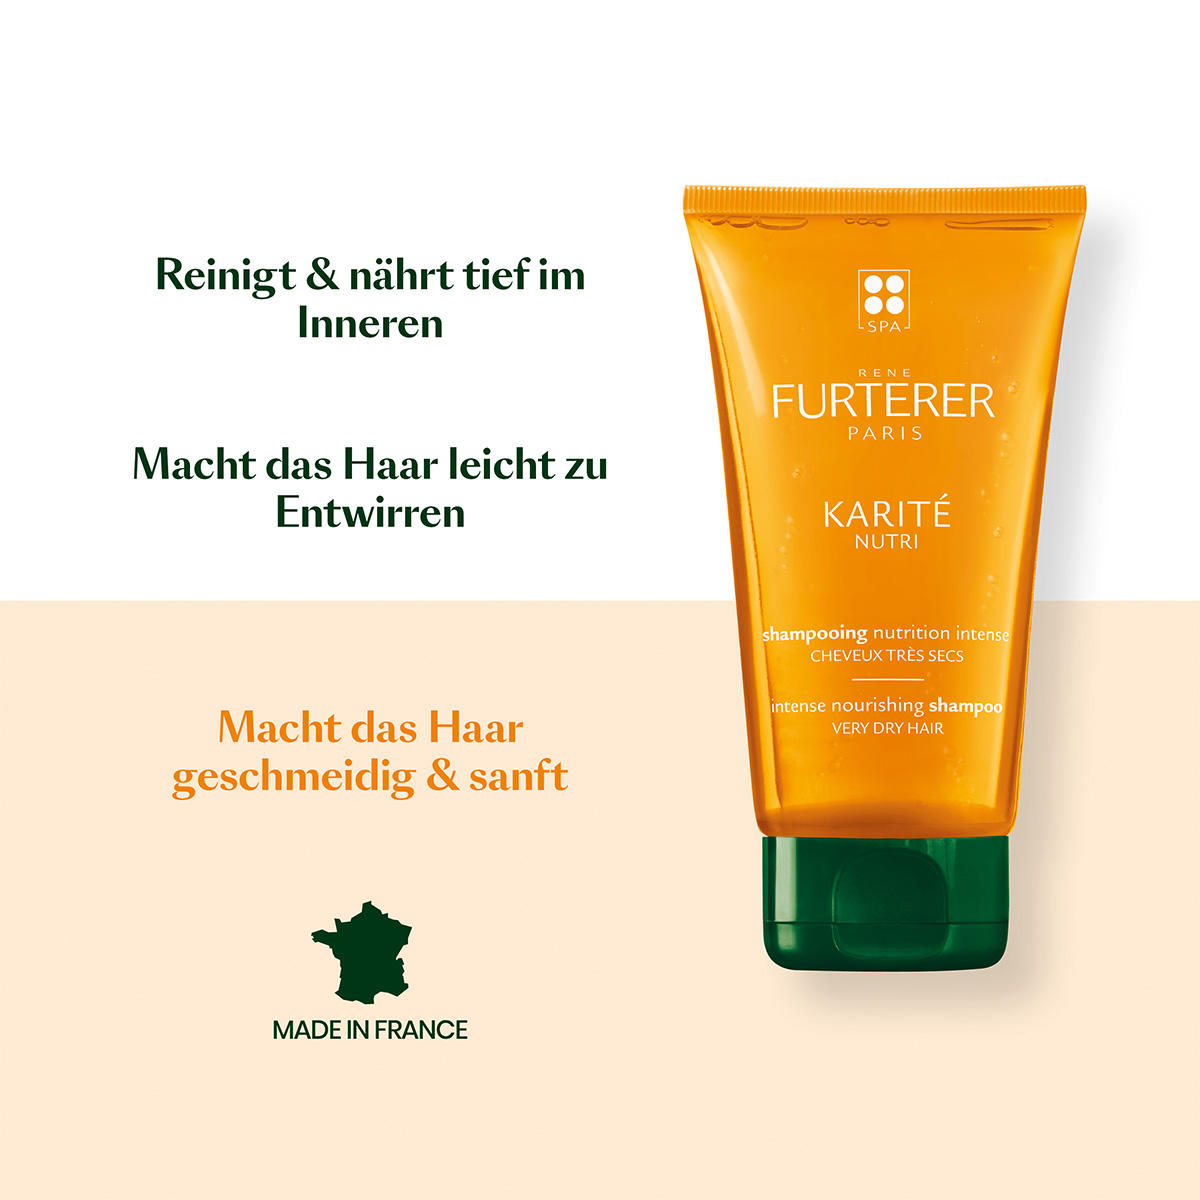 René Furterer Karité Nutri Intensief voedende shampoo 150 ml - 7